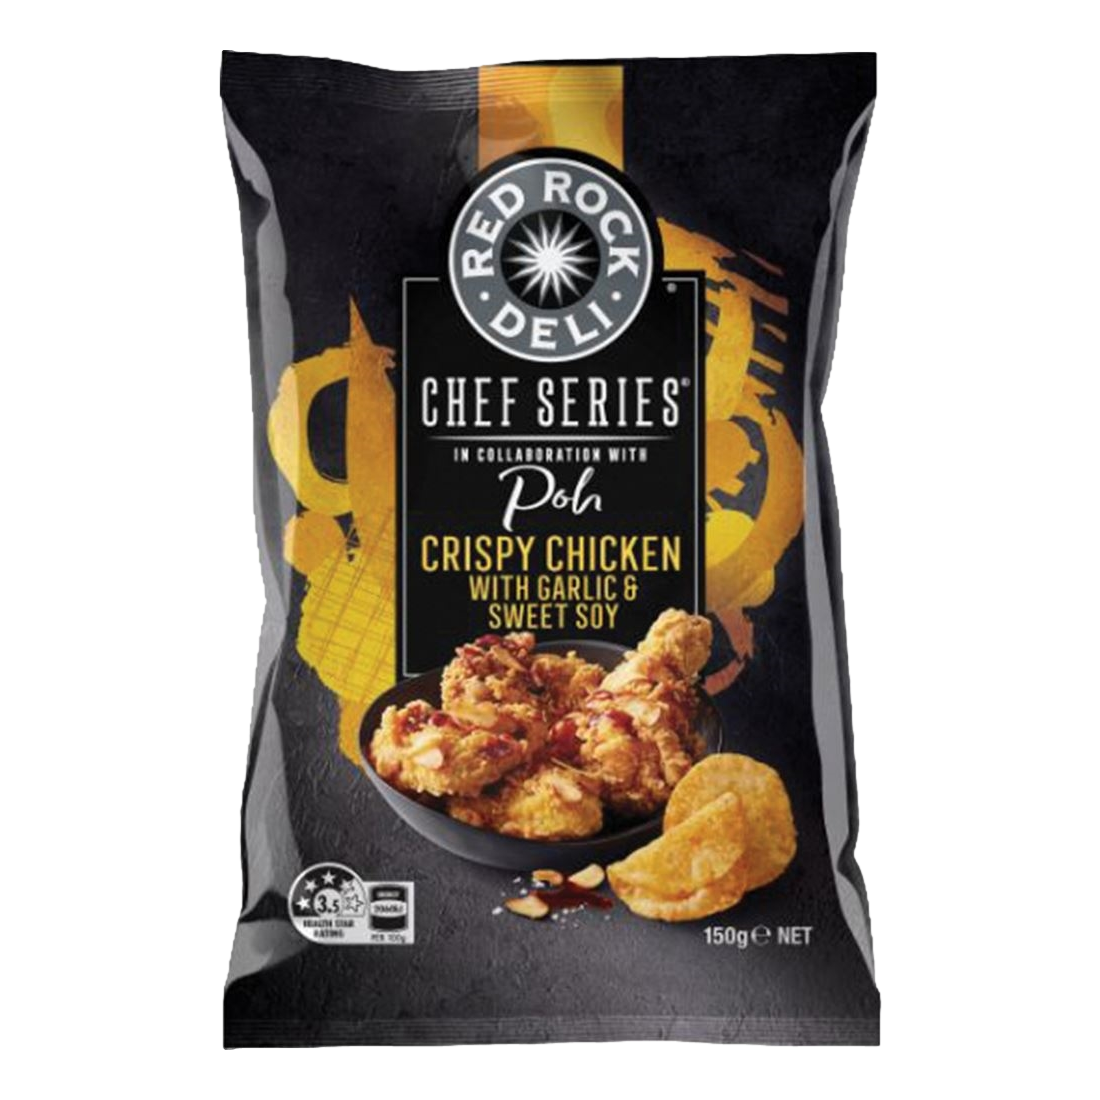 Red Rock Deli Chef Series Crispy Chicken Garlic & Sweet Soy Potato Chips 150g